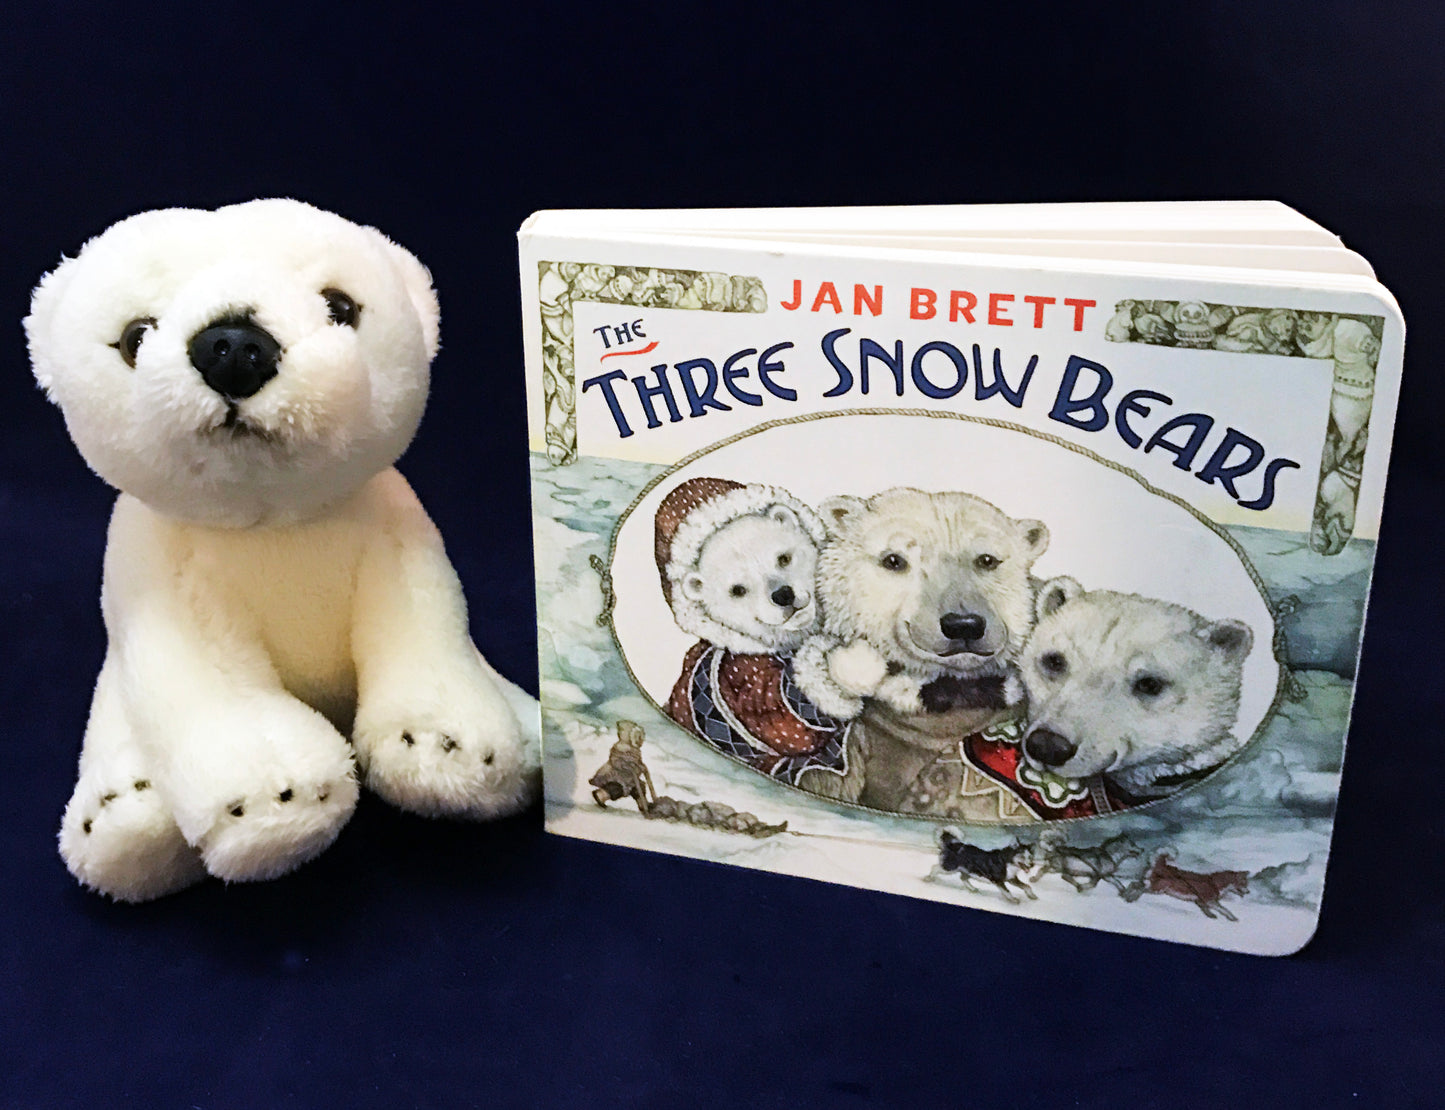 Plush polar bear doll to go along with The Three Snow Bears by Jan Brett